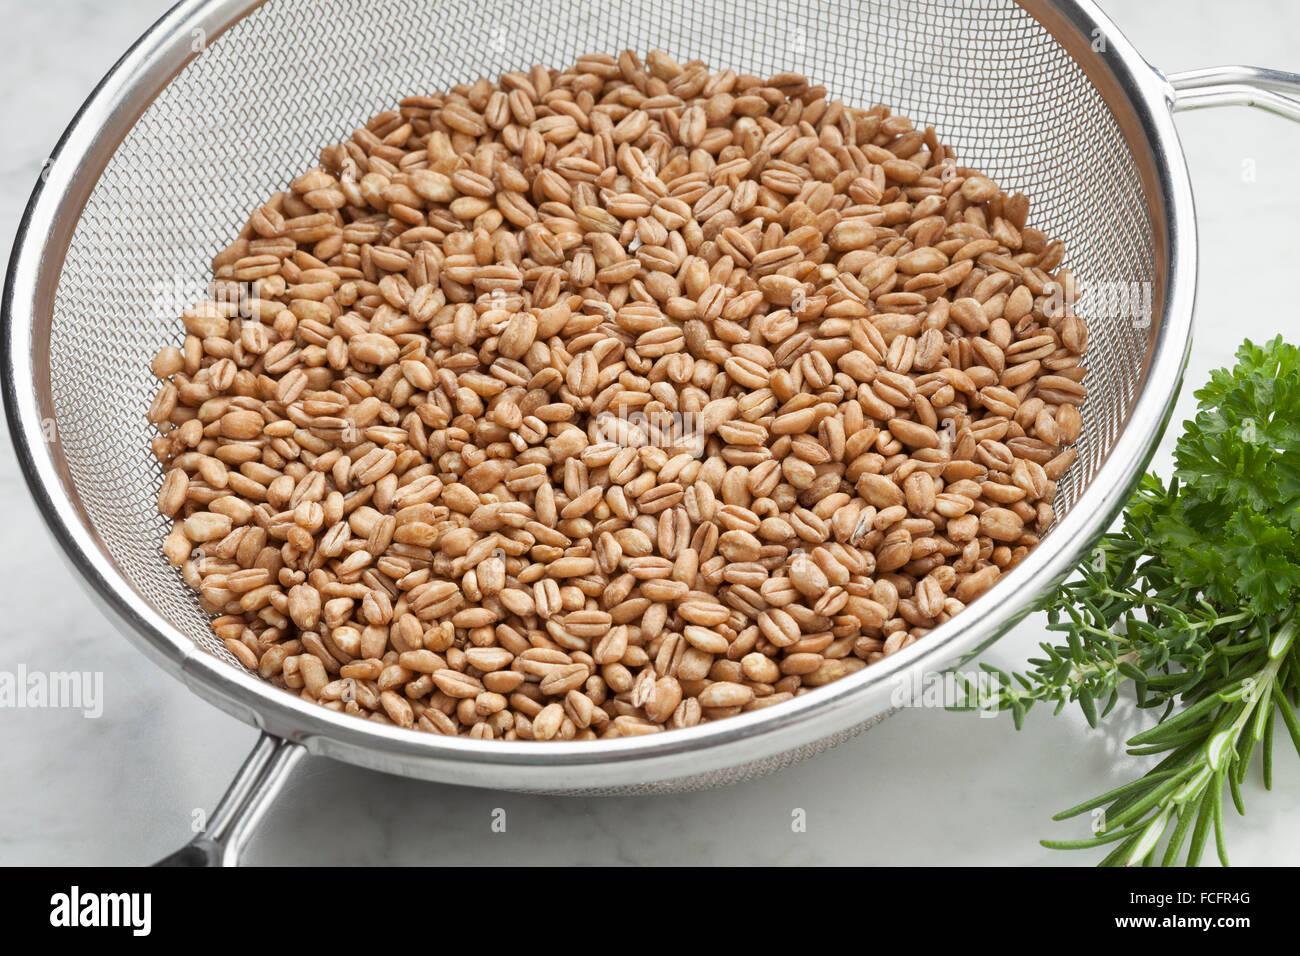 Raw Farro grains in a kitchen sieve Stock Photo